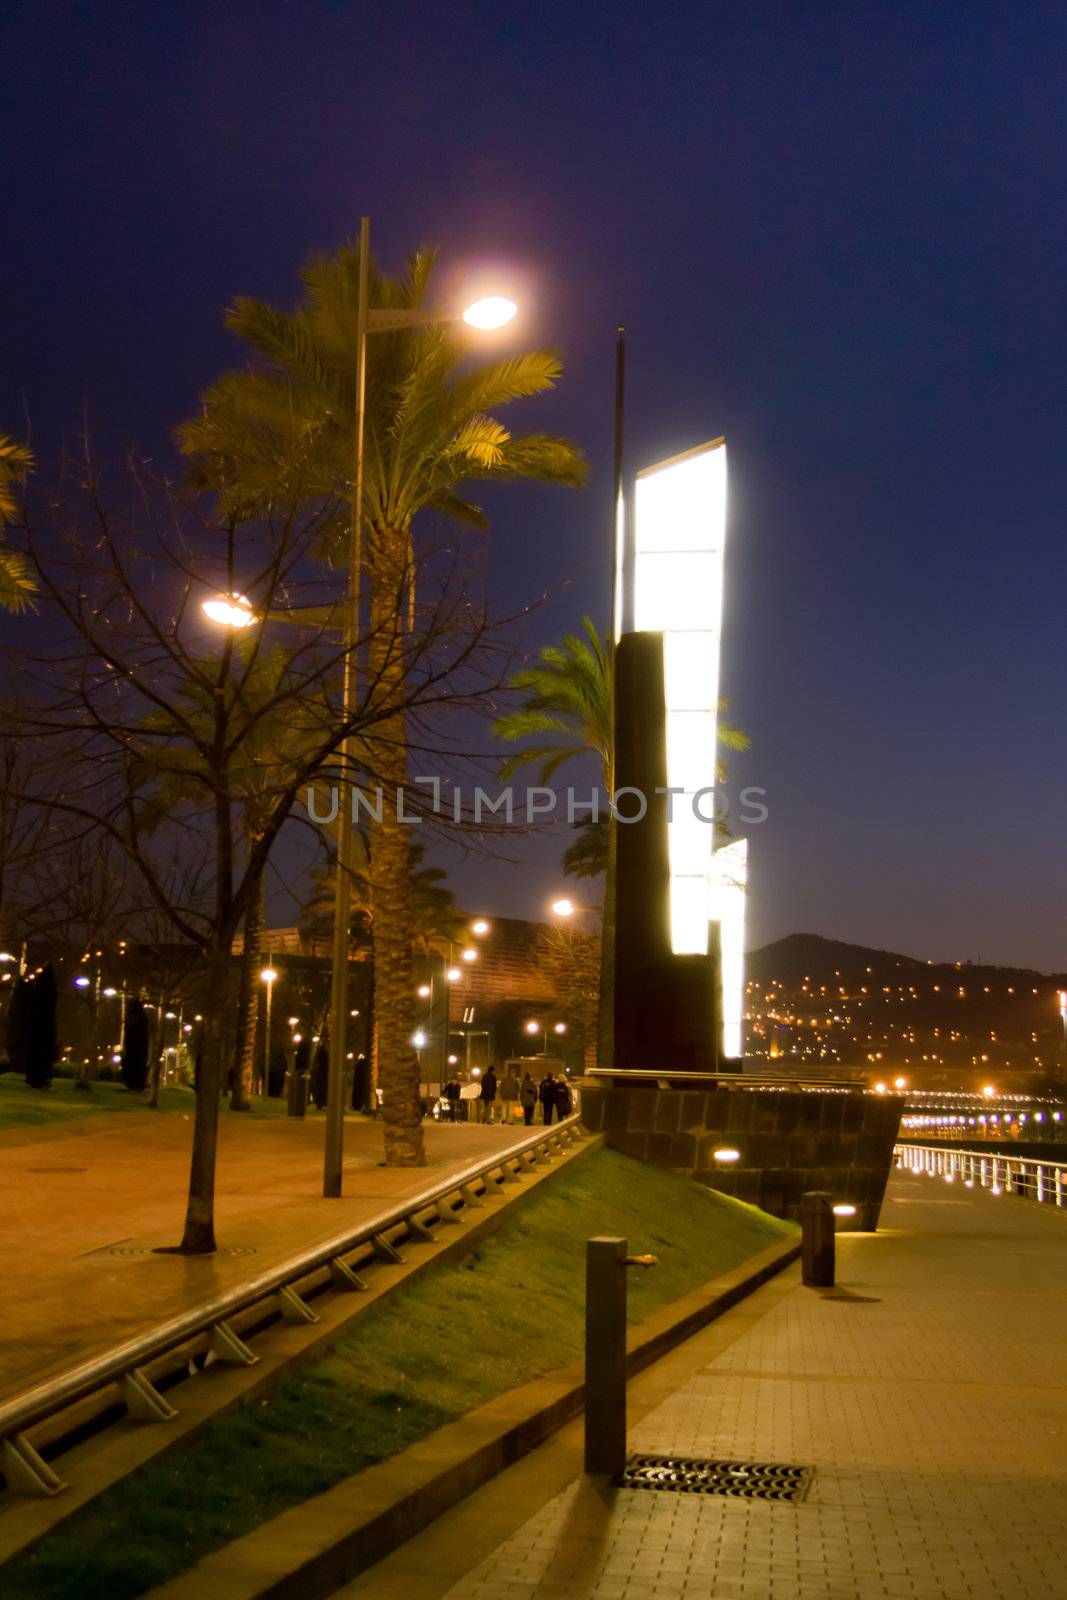 Bilbao river promenade at night by doble.d